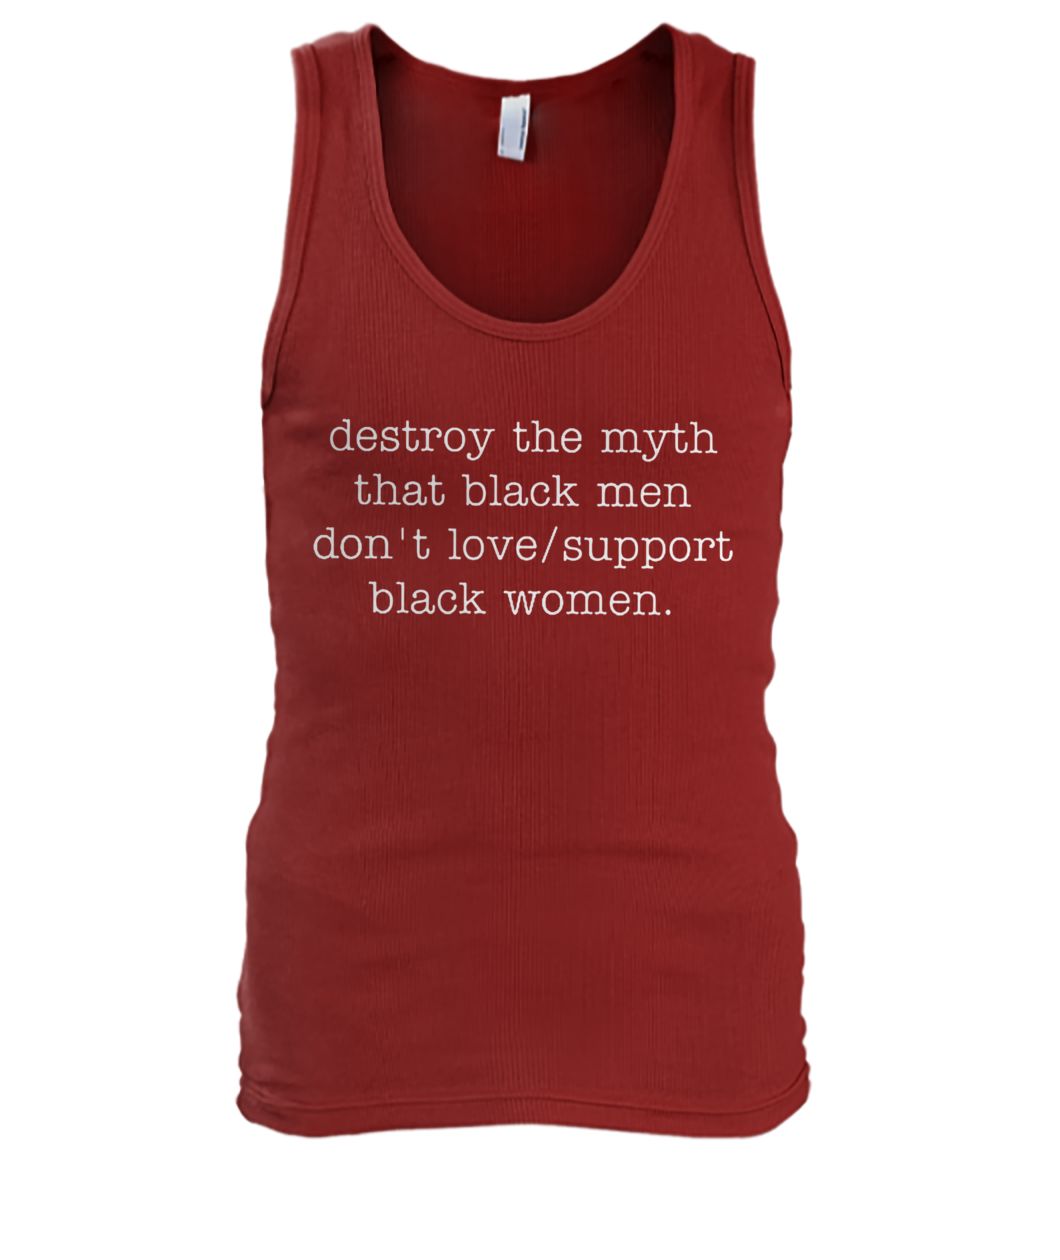 Destroy the myth that black men don't love support black women men's tank top